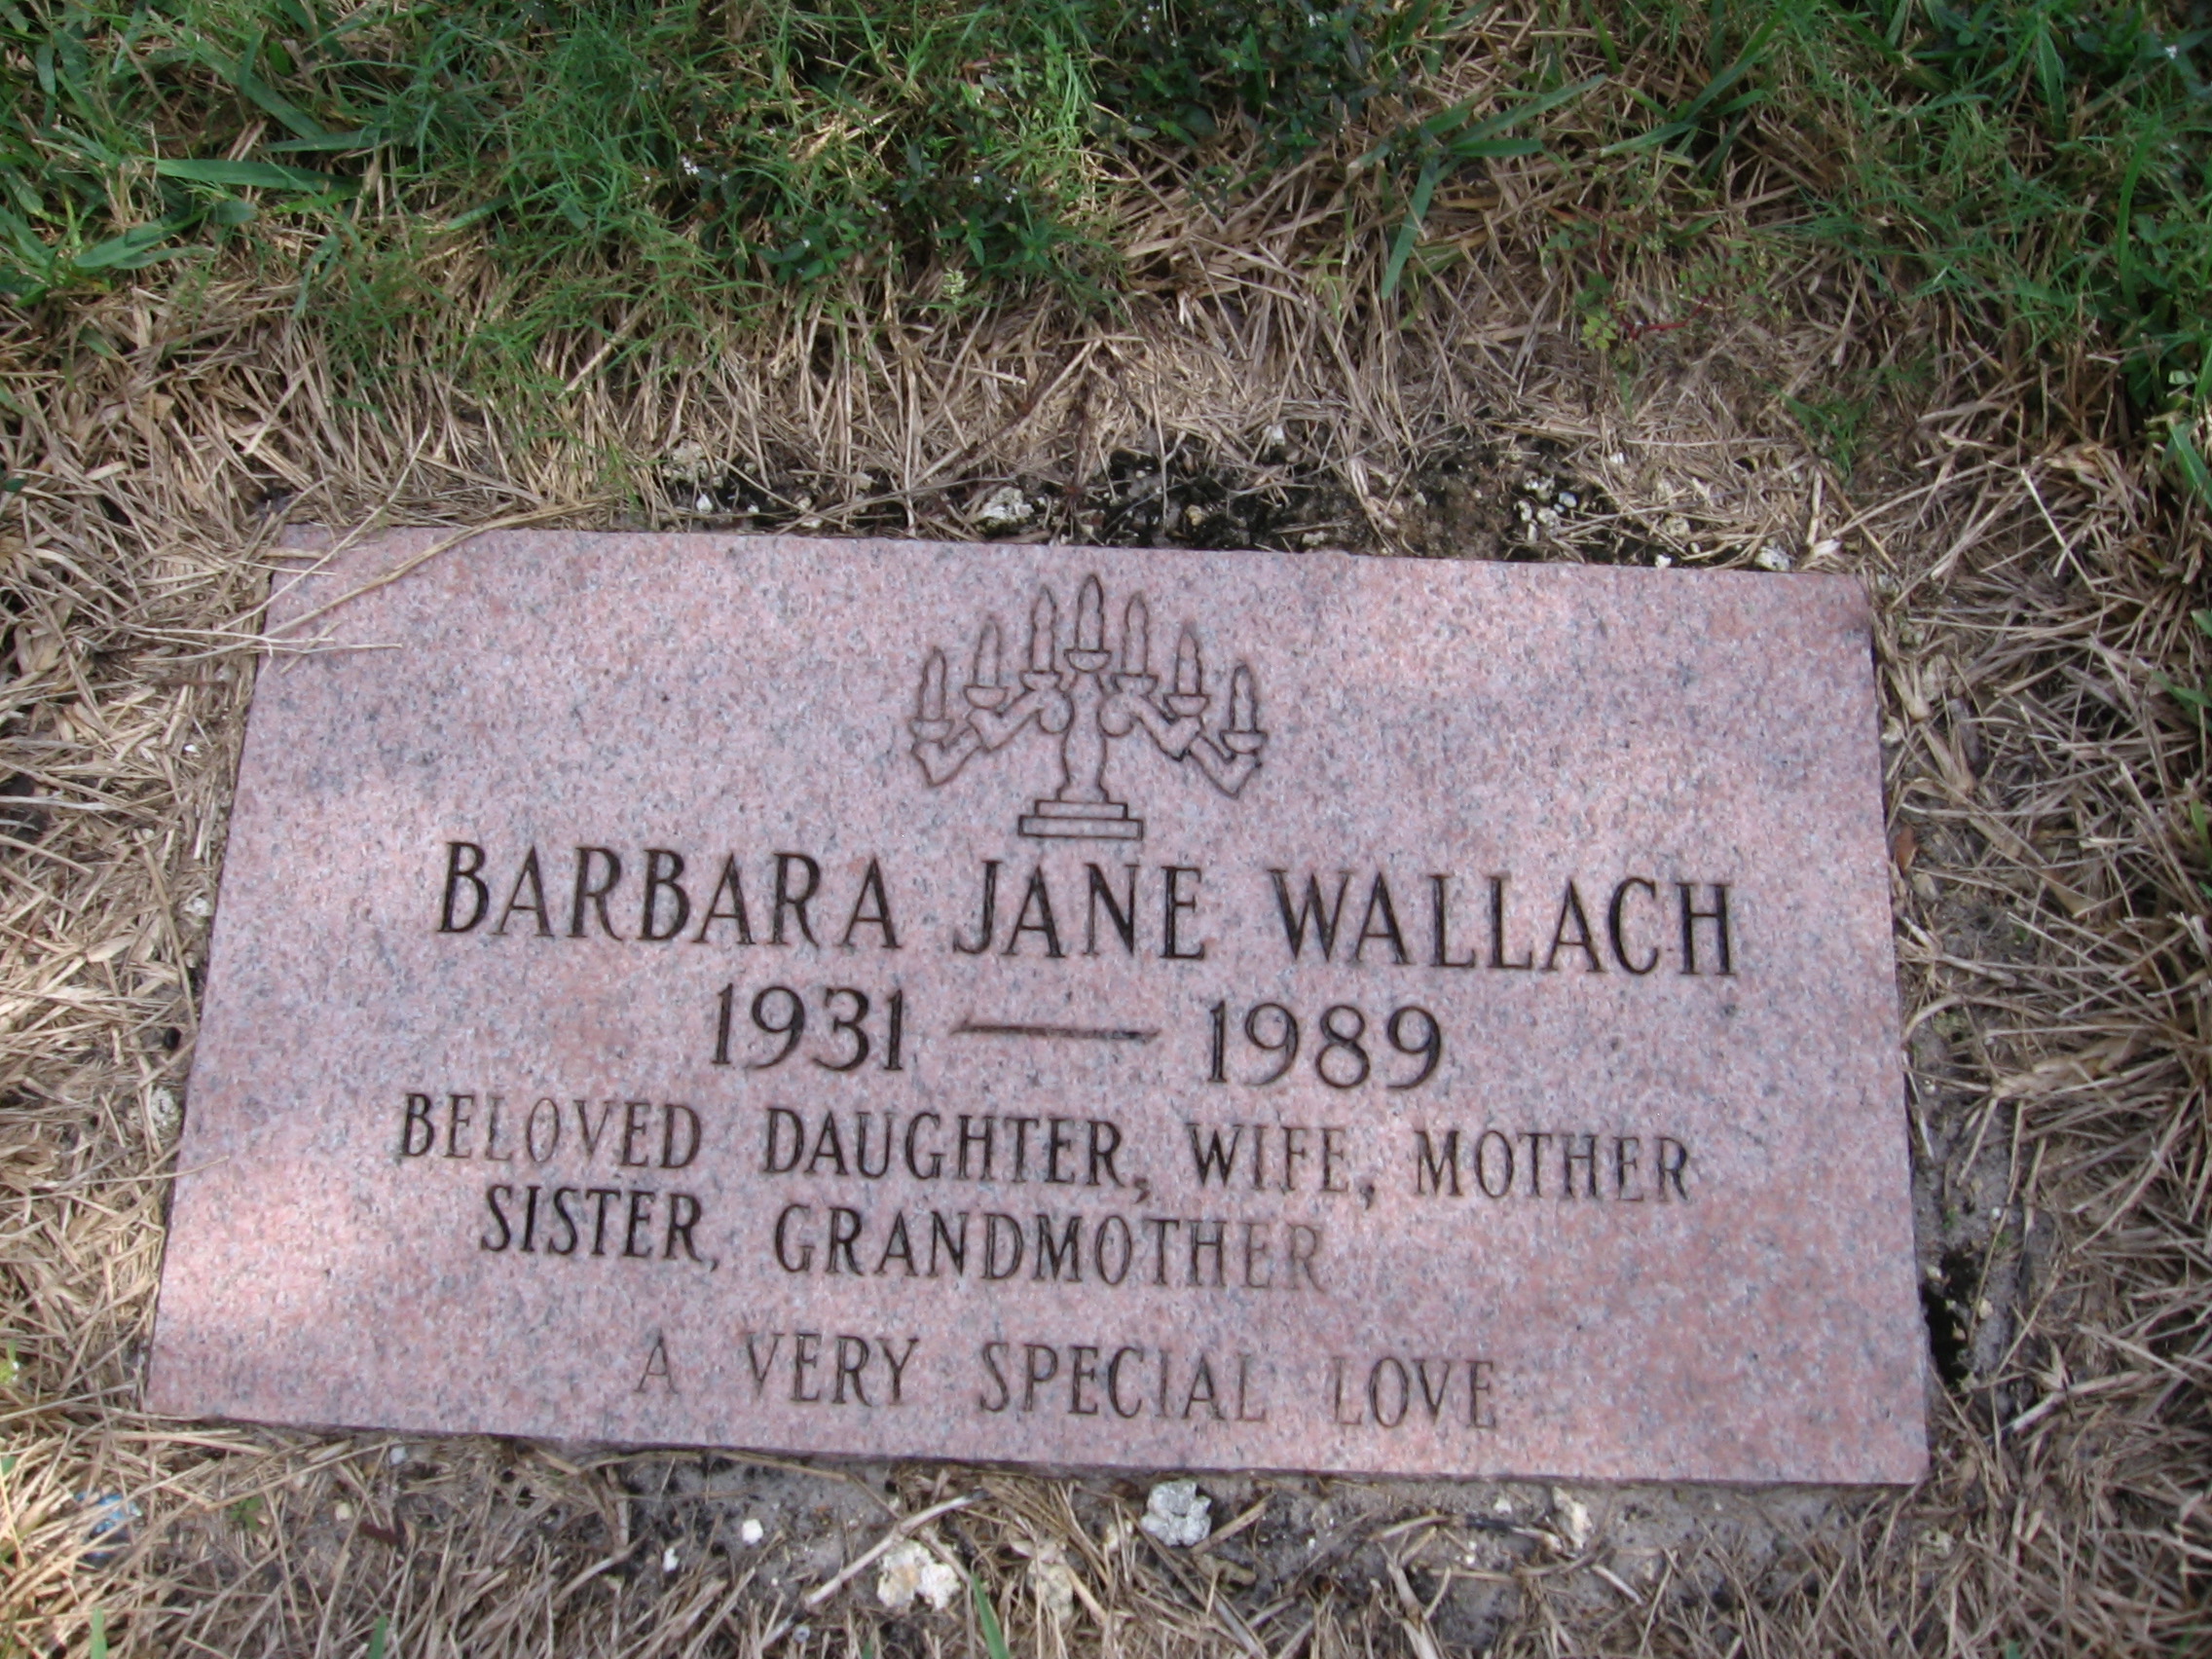 Barbara Jane Wallach